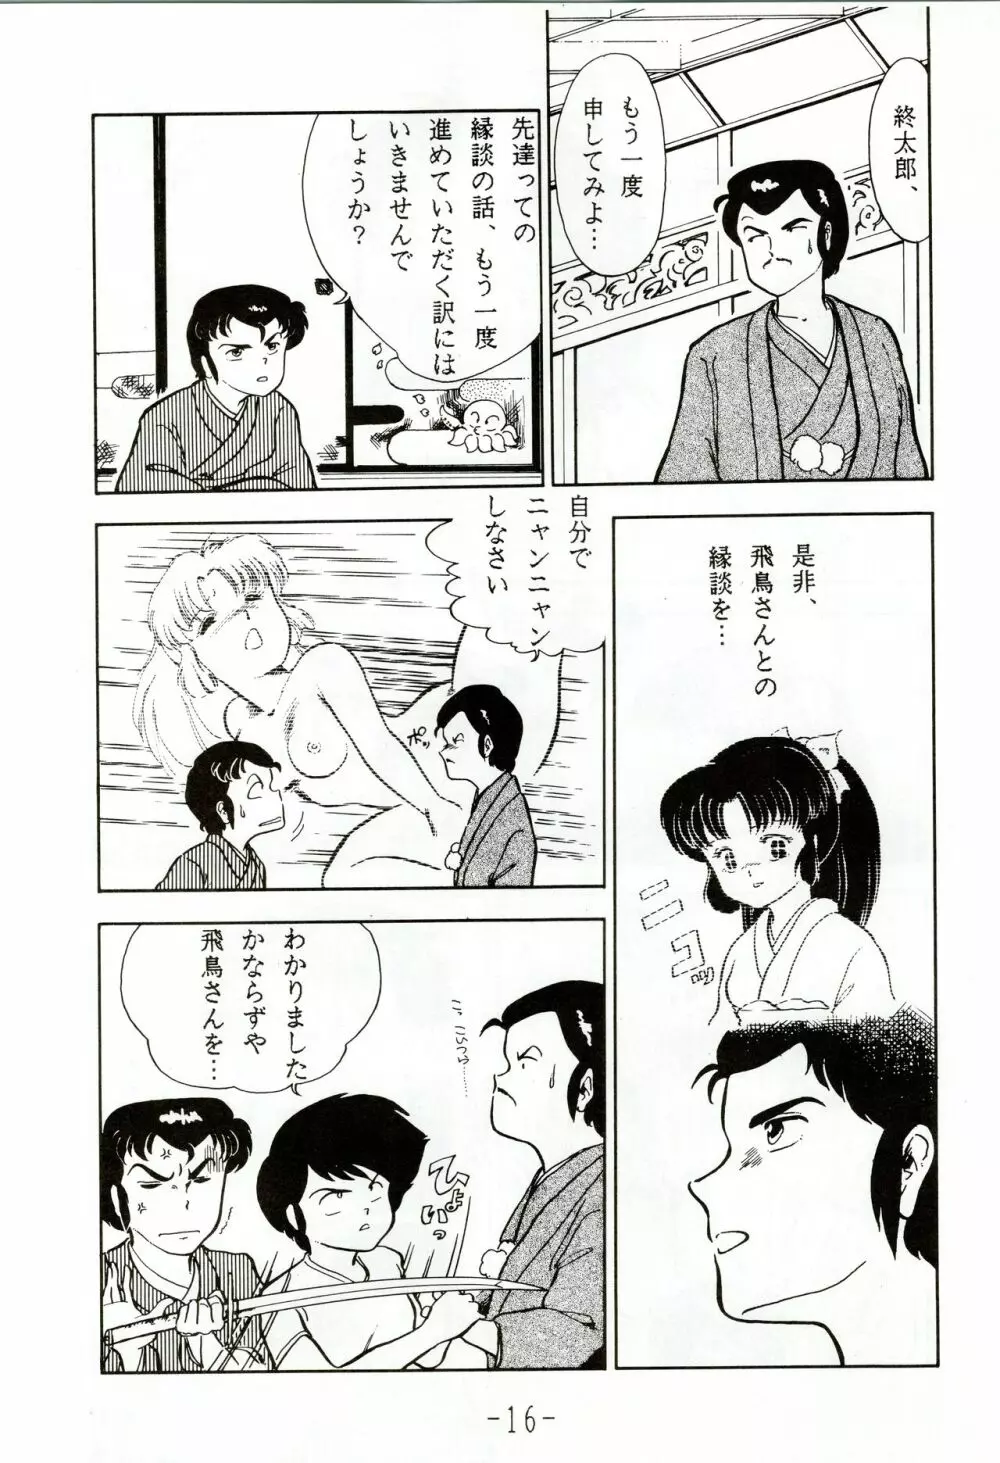 甲冑伝説 - page16